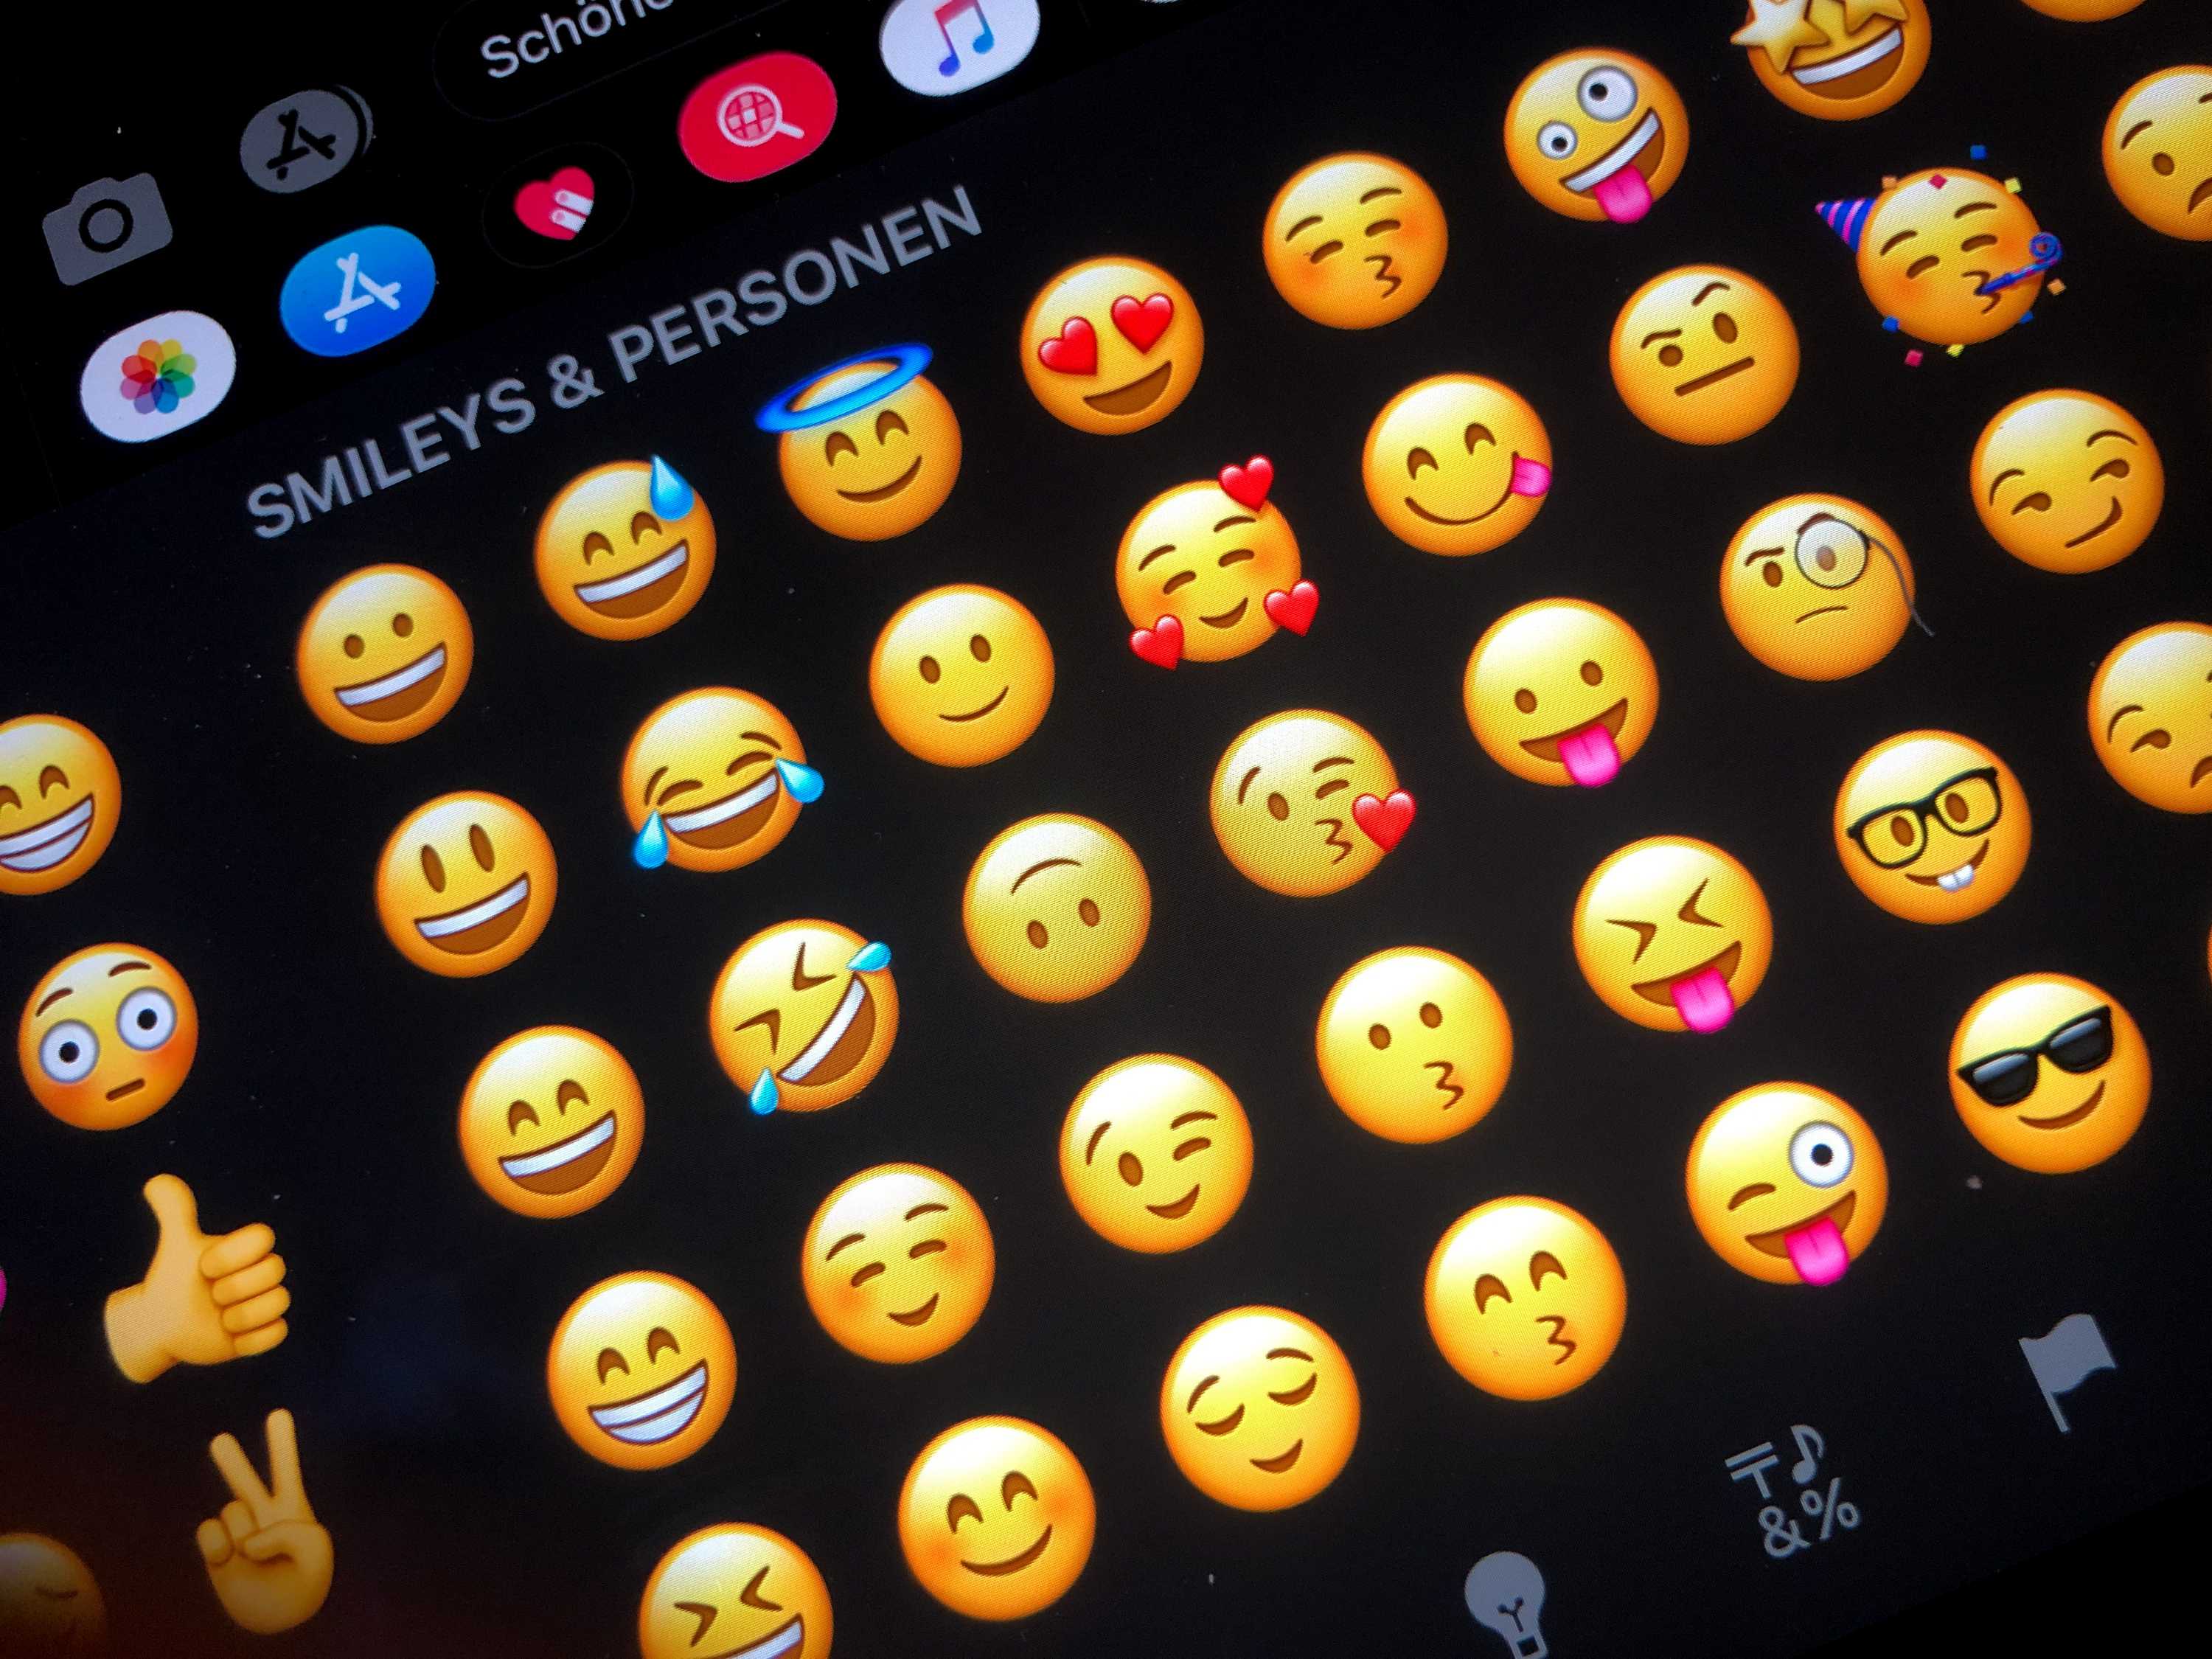 Emojis: Universal language, or harbinger of an age of moral illiteracy?